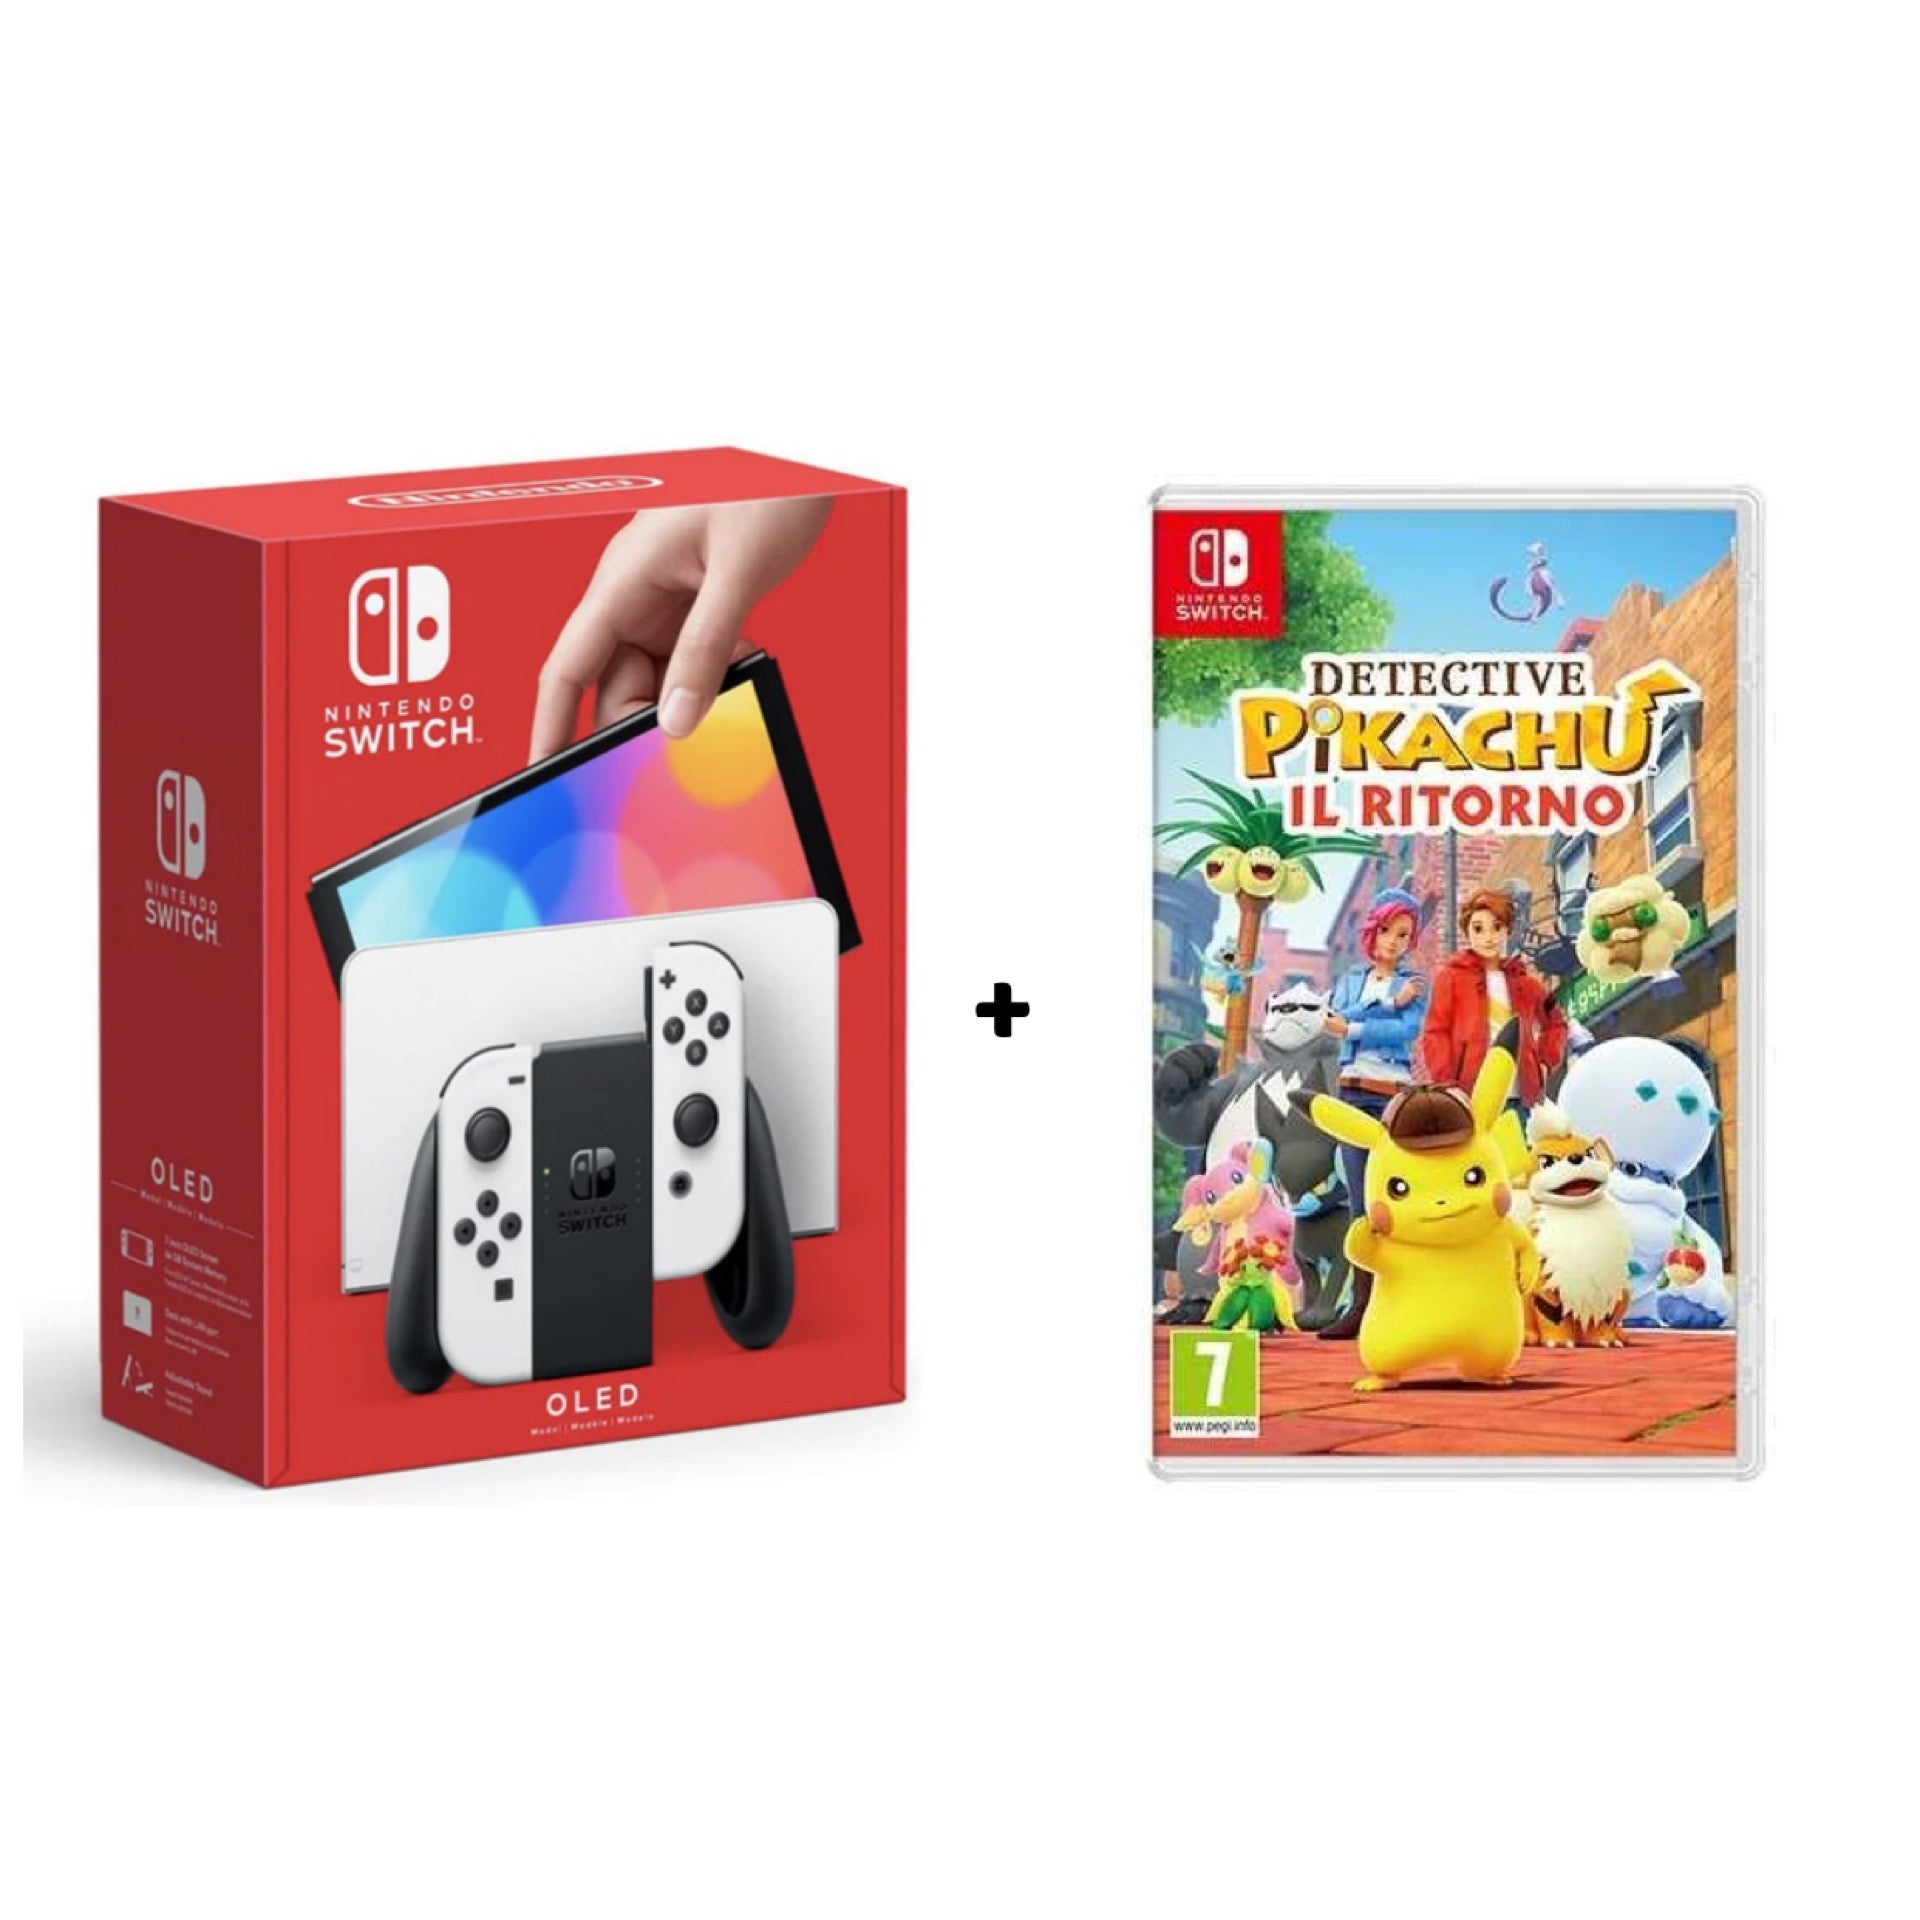 Nintendo Switch Oled Bianca + Detective Pikachu: il ritorno